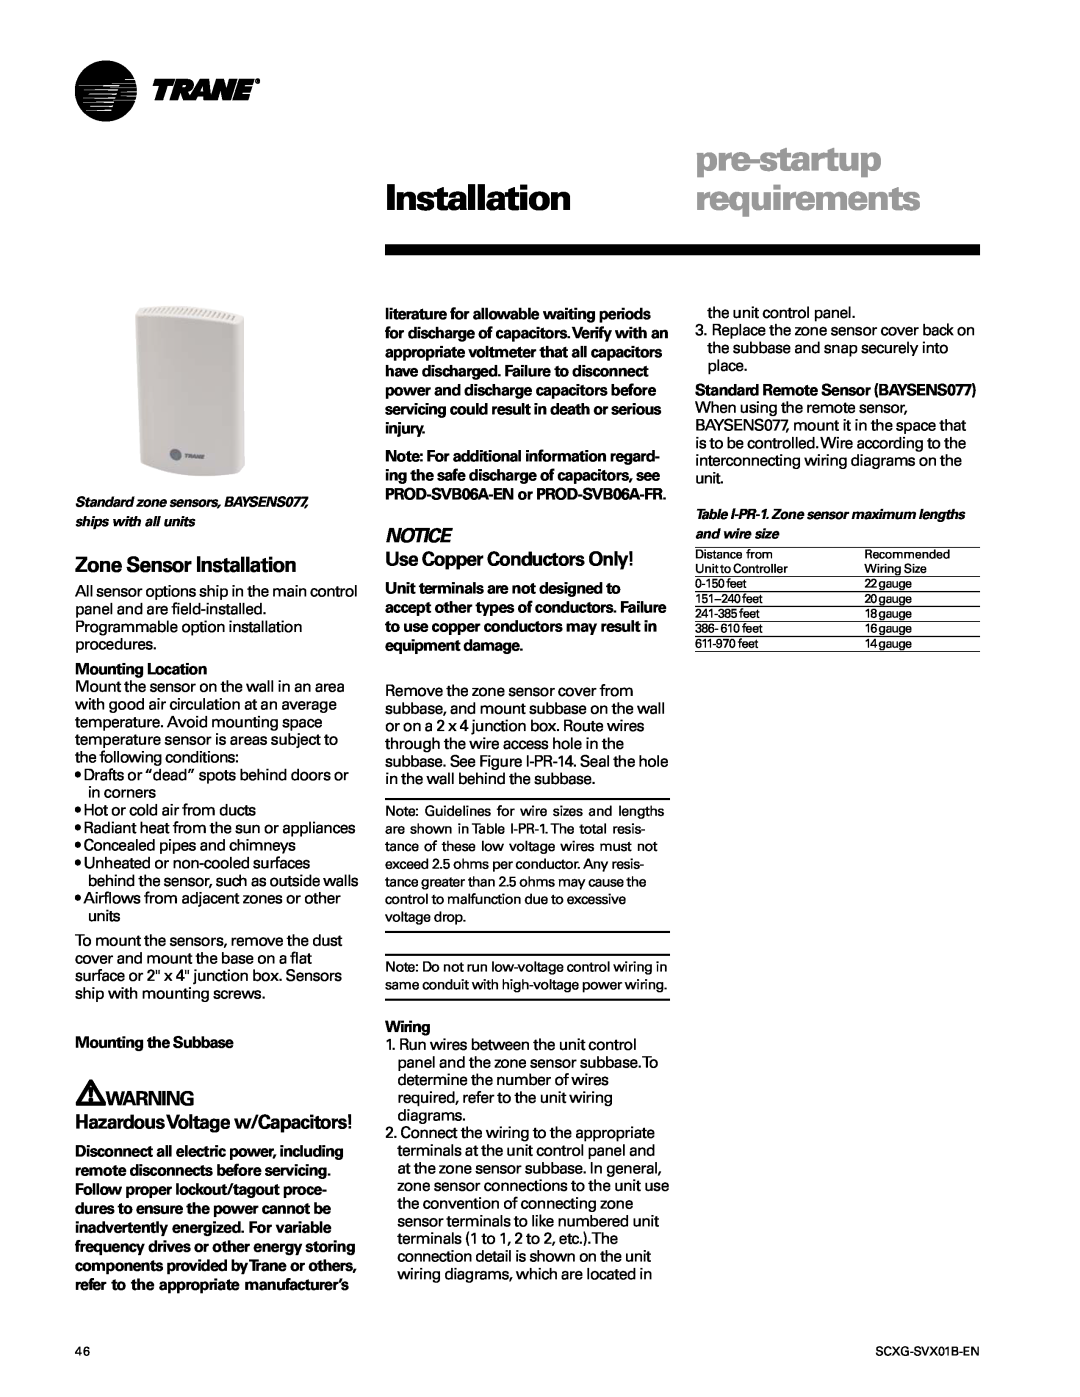 Trane SCXG-SVX01B-EN manual Zone Sensor Installation, pre-startup, Installation requirements, HazardousVoltage w/Capacitors 